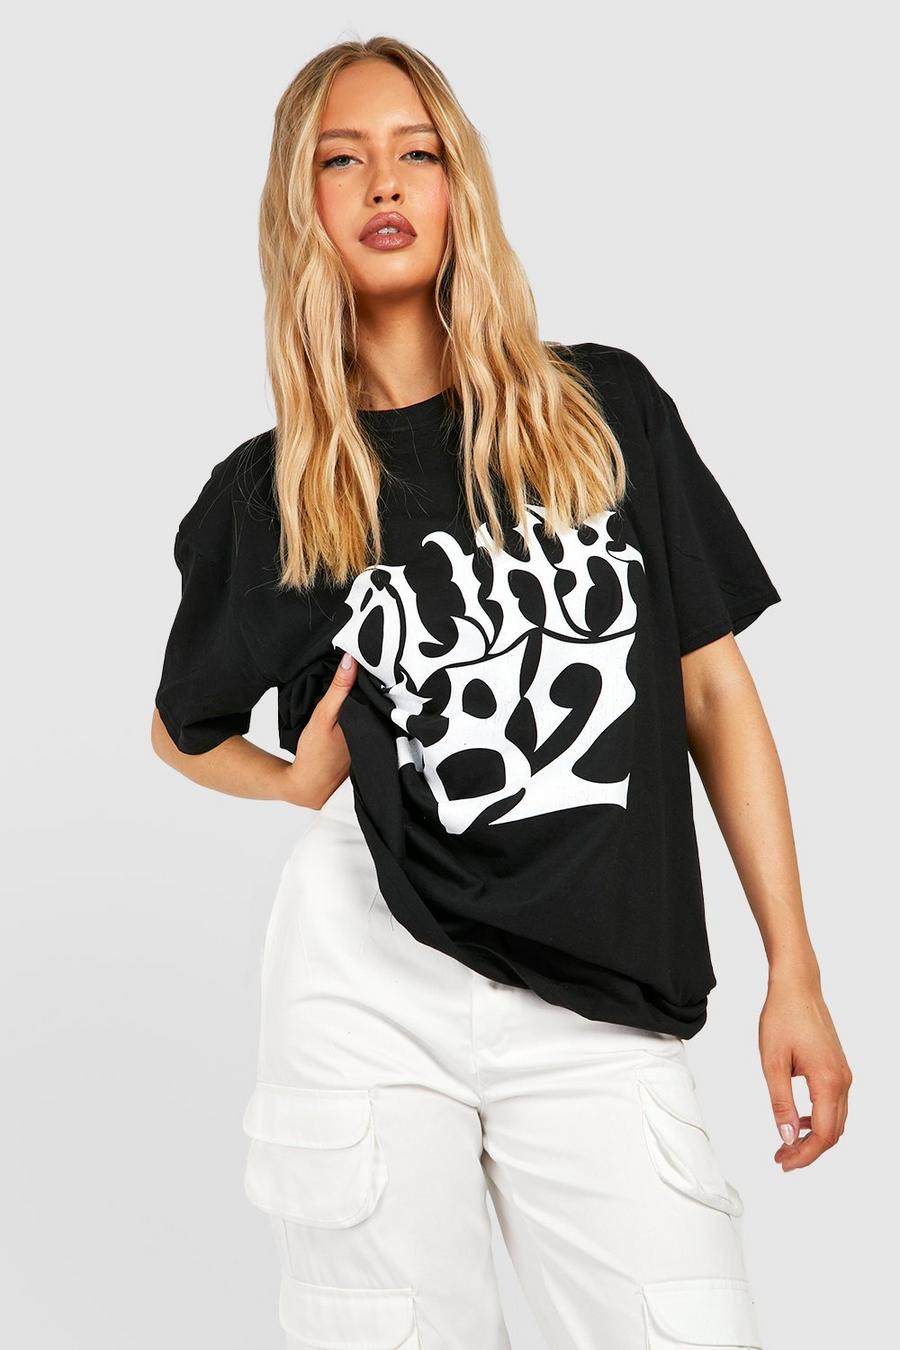 Black nero Tall Oversized Blink 182 License T-shirt image number 1